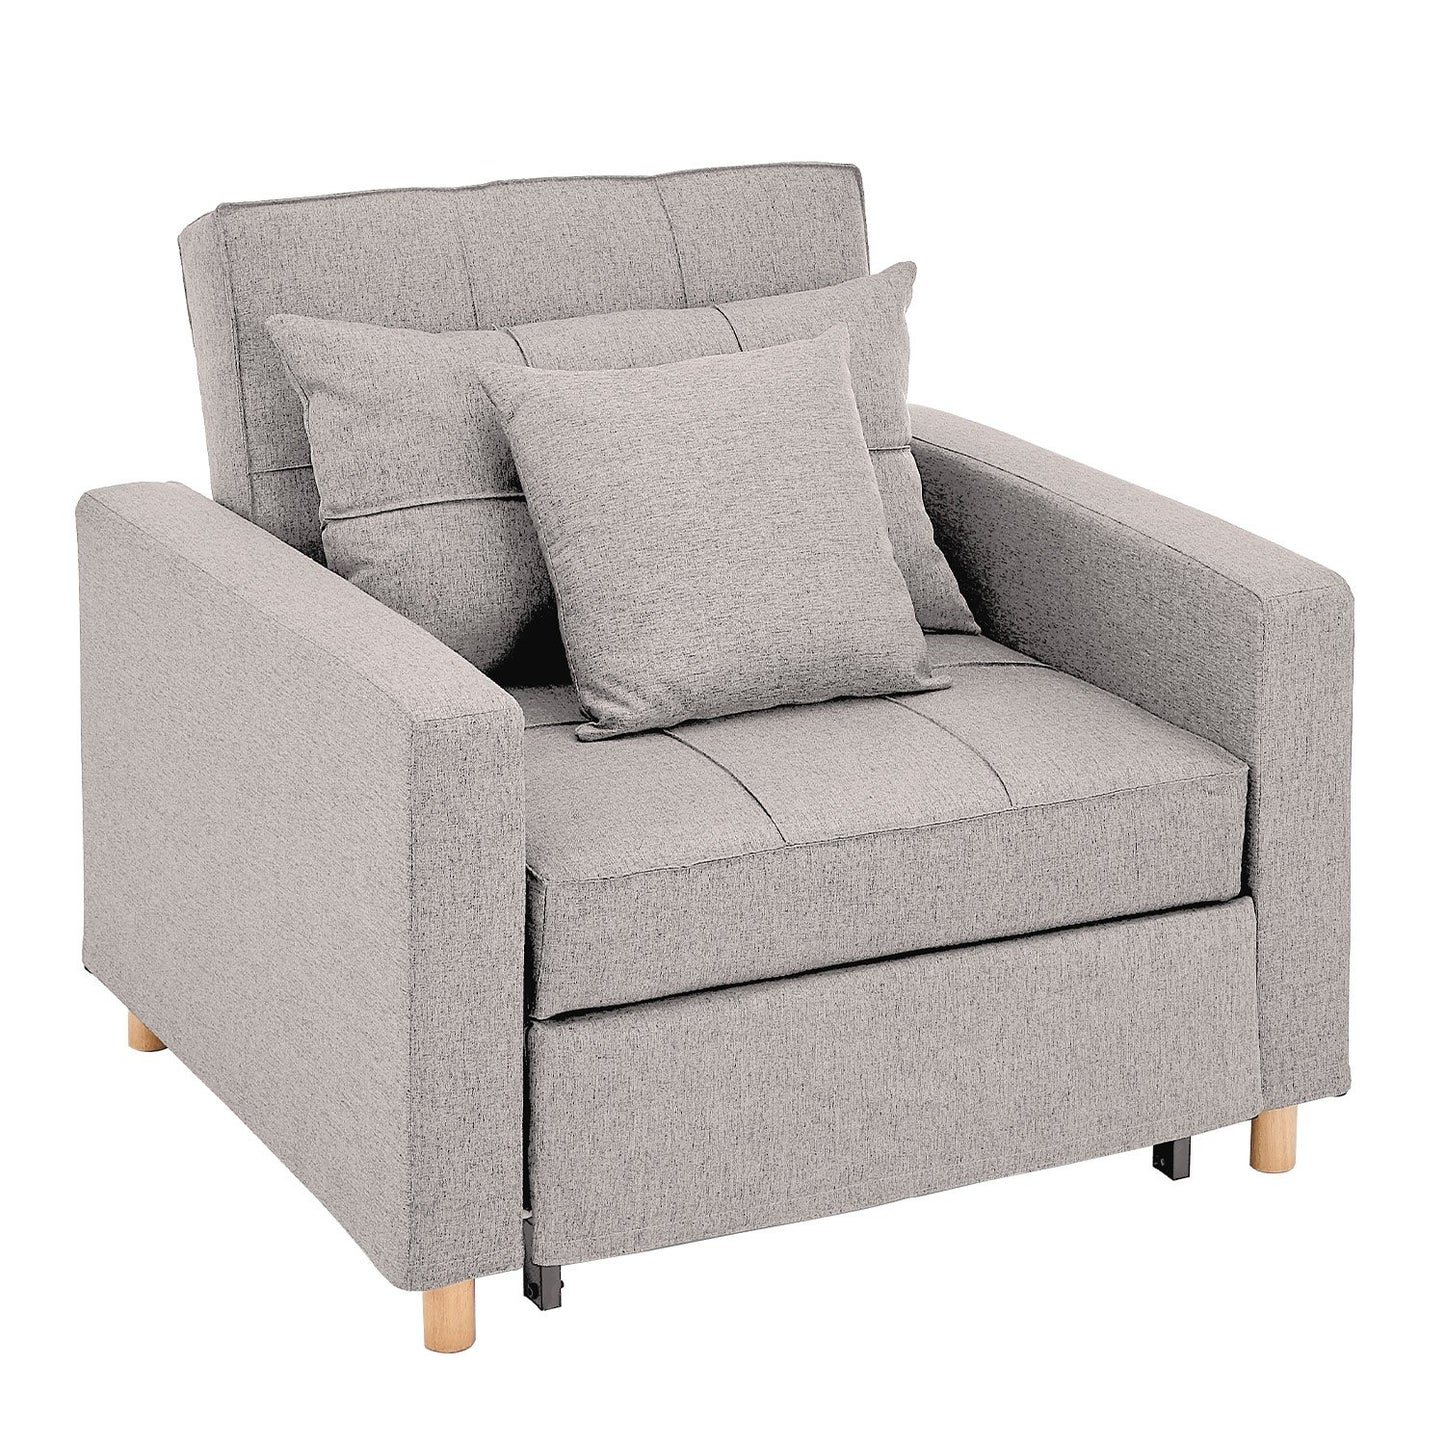 Suri 3-in-1 Convertible Sofa Chair Bed by Sarantino - Khaki